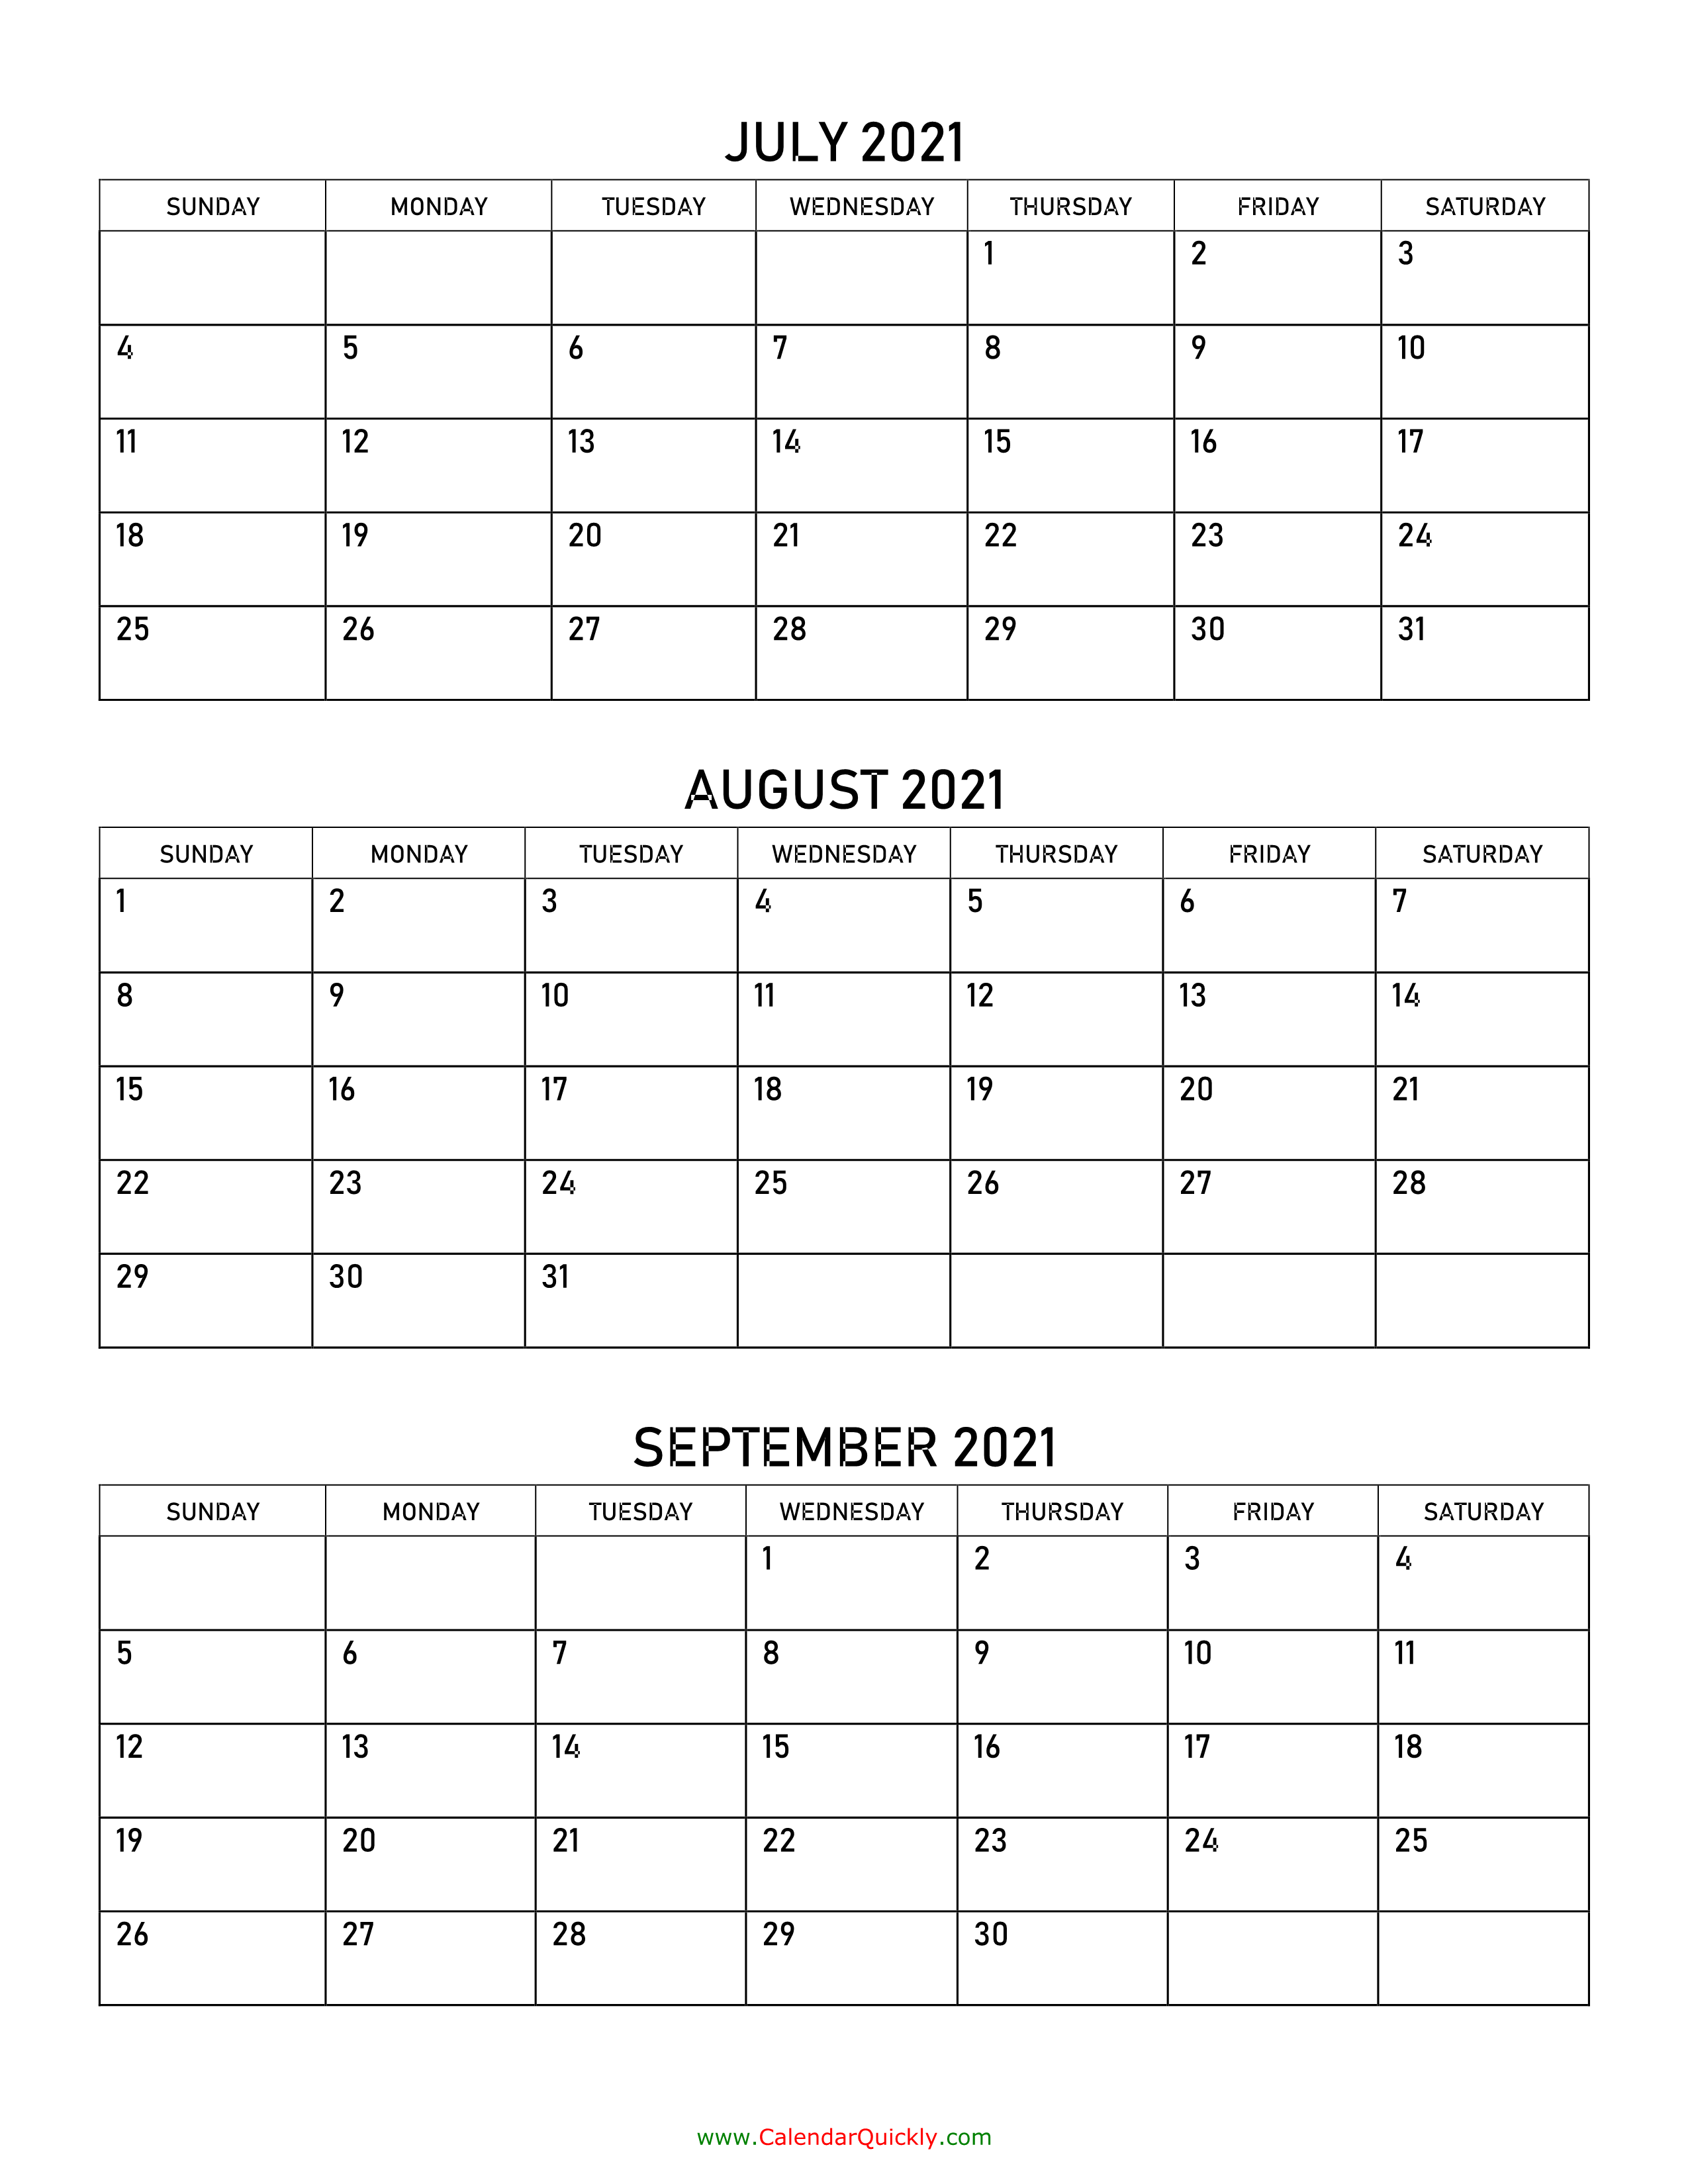 July to September 2021 Calendar Calendar Quickly